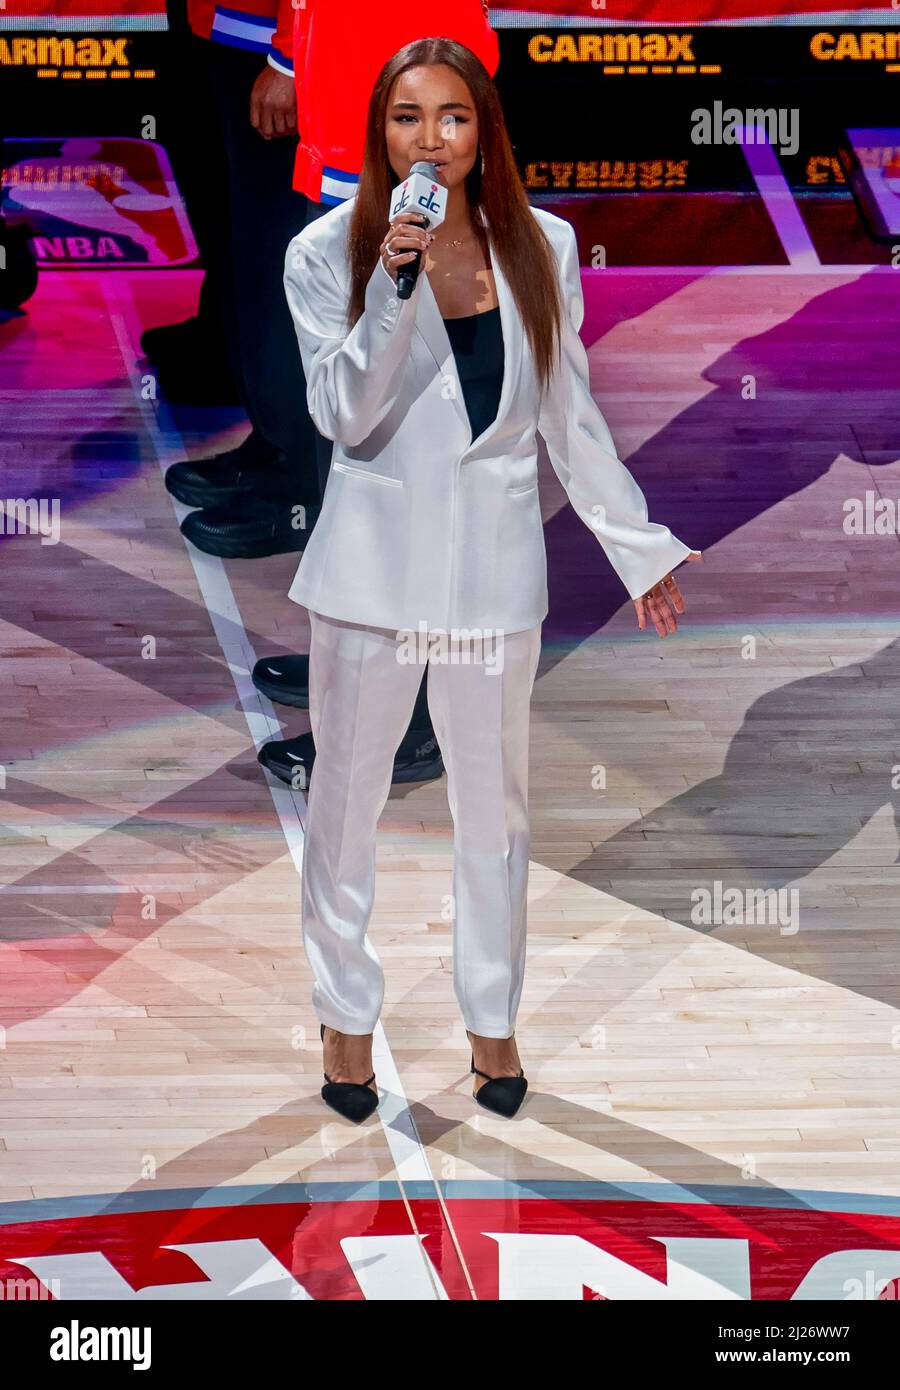 Japanese singing star Crystal Kay sings the American National Anthem at a Washington Wizards basketball game Stock Photo